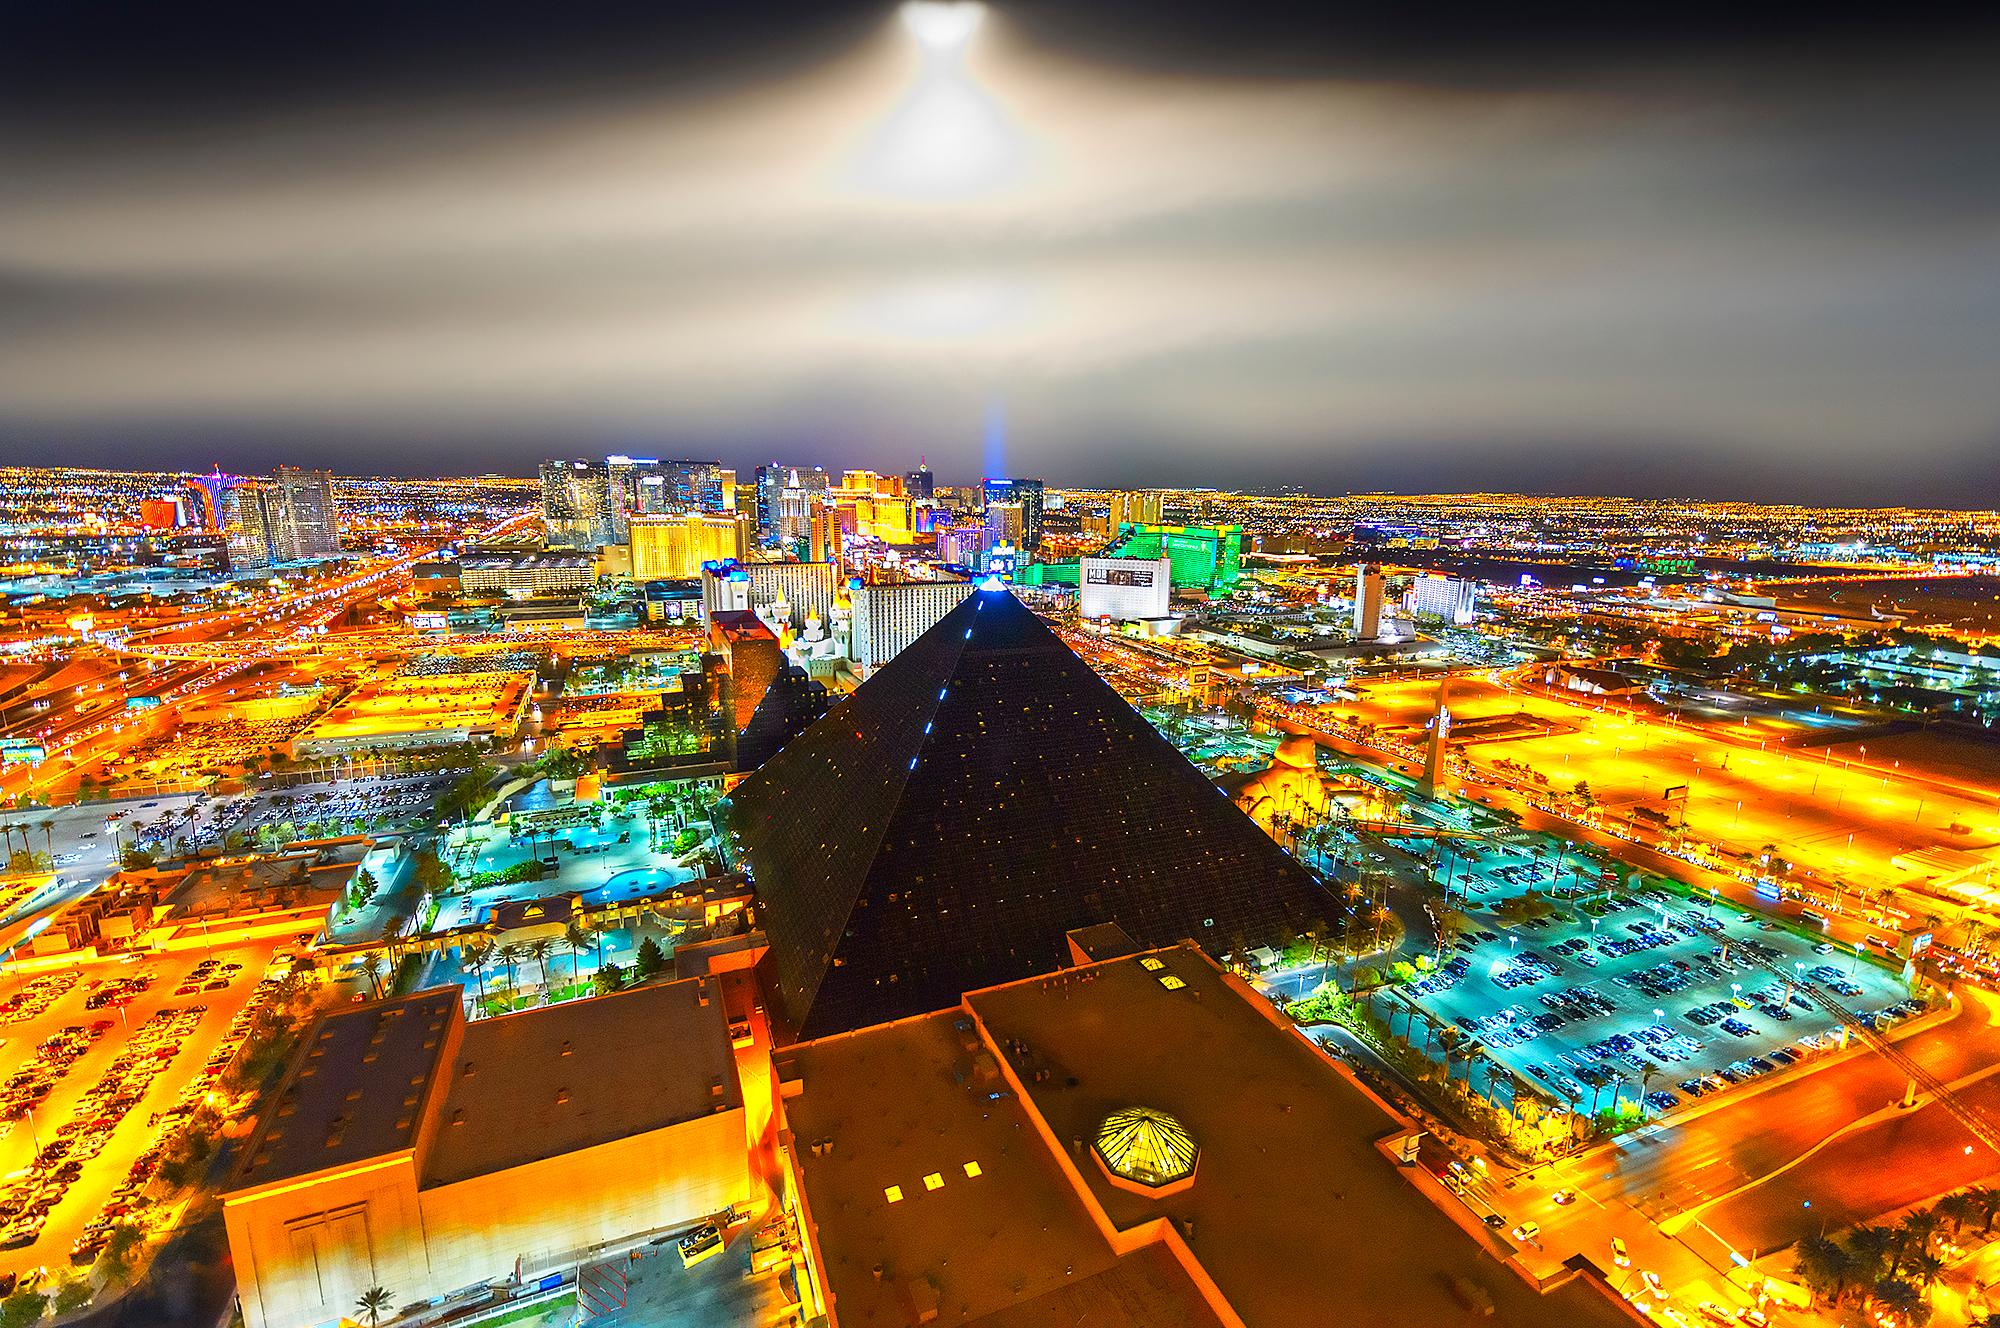 Elevated View Of Las Vegas At Night mit mondbeschienenem Himmel